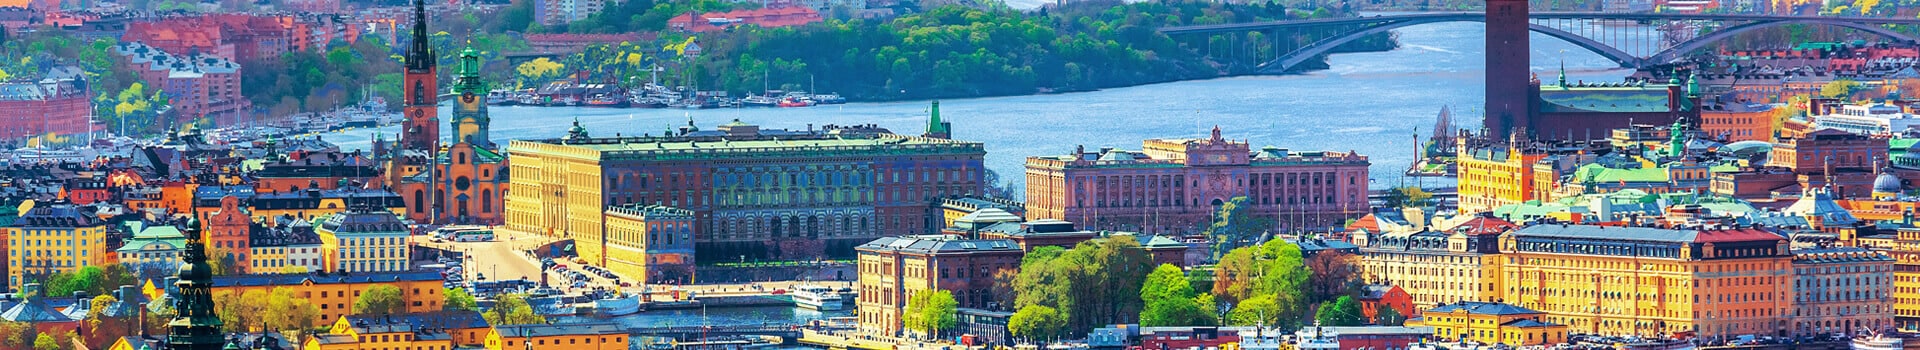 Bari - Estocolmo